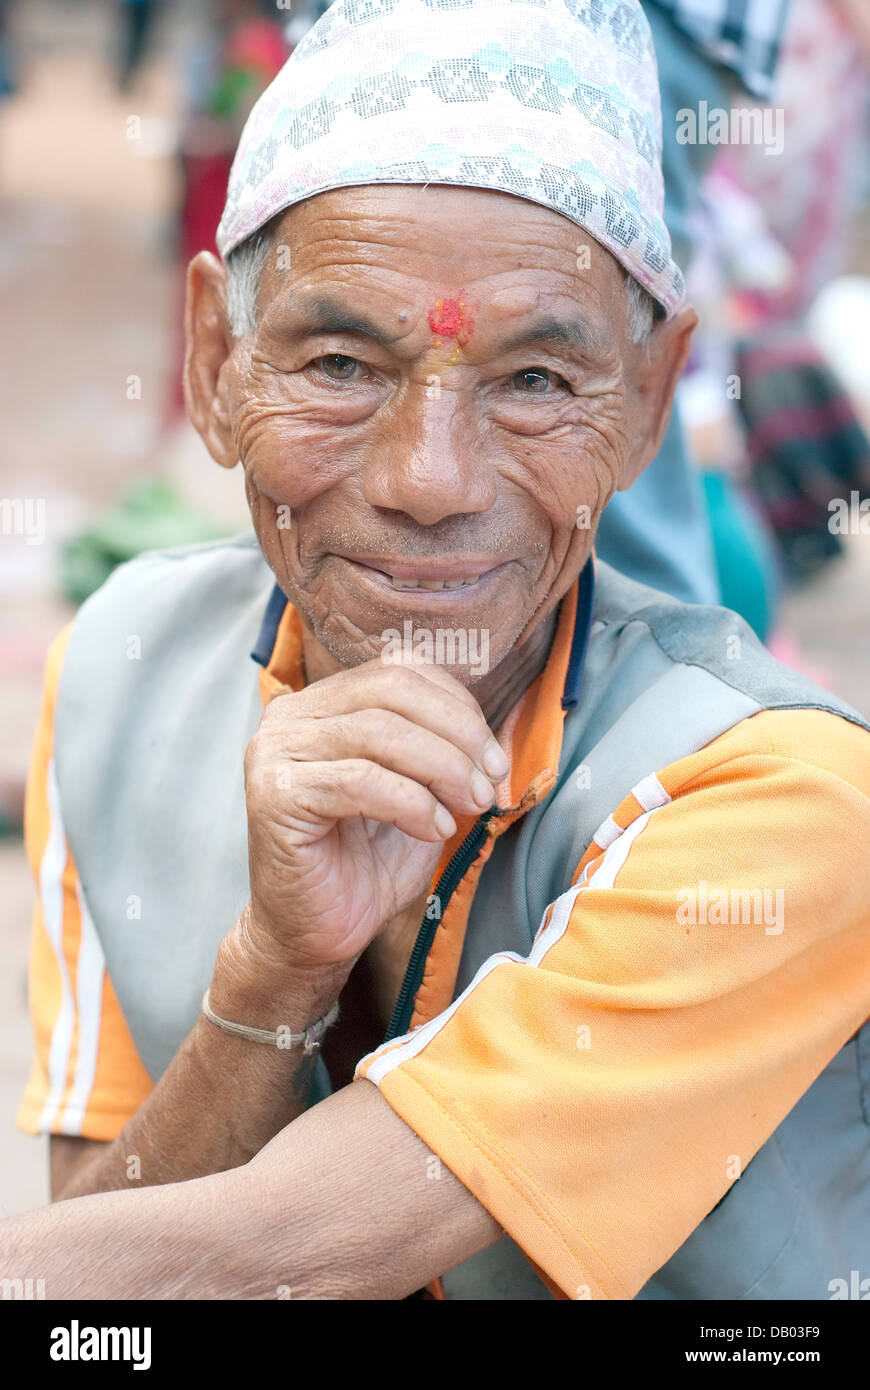 Newar man of Bhaktapur giving a smiling pose Stock Photo